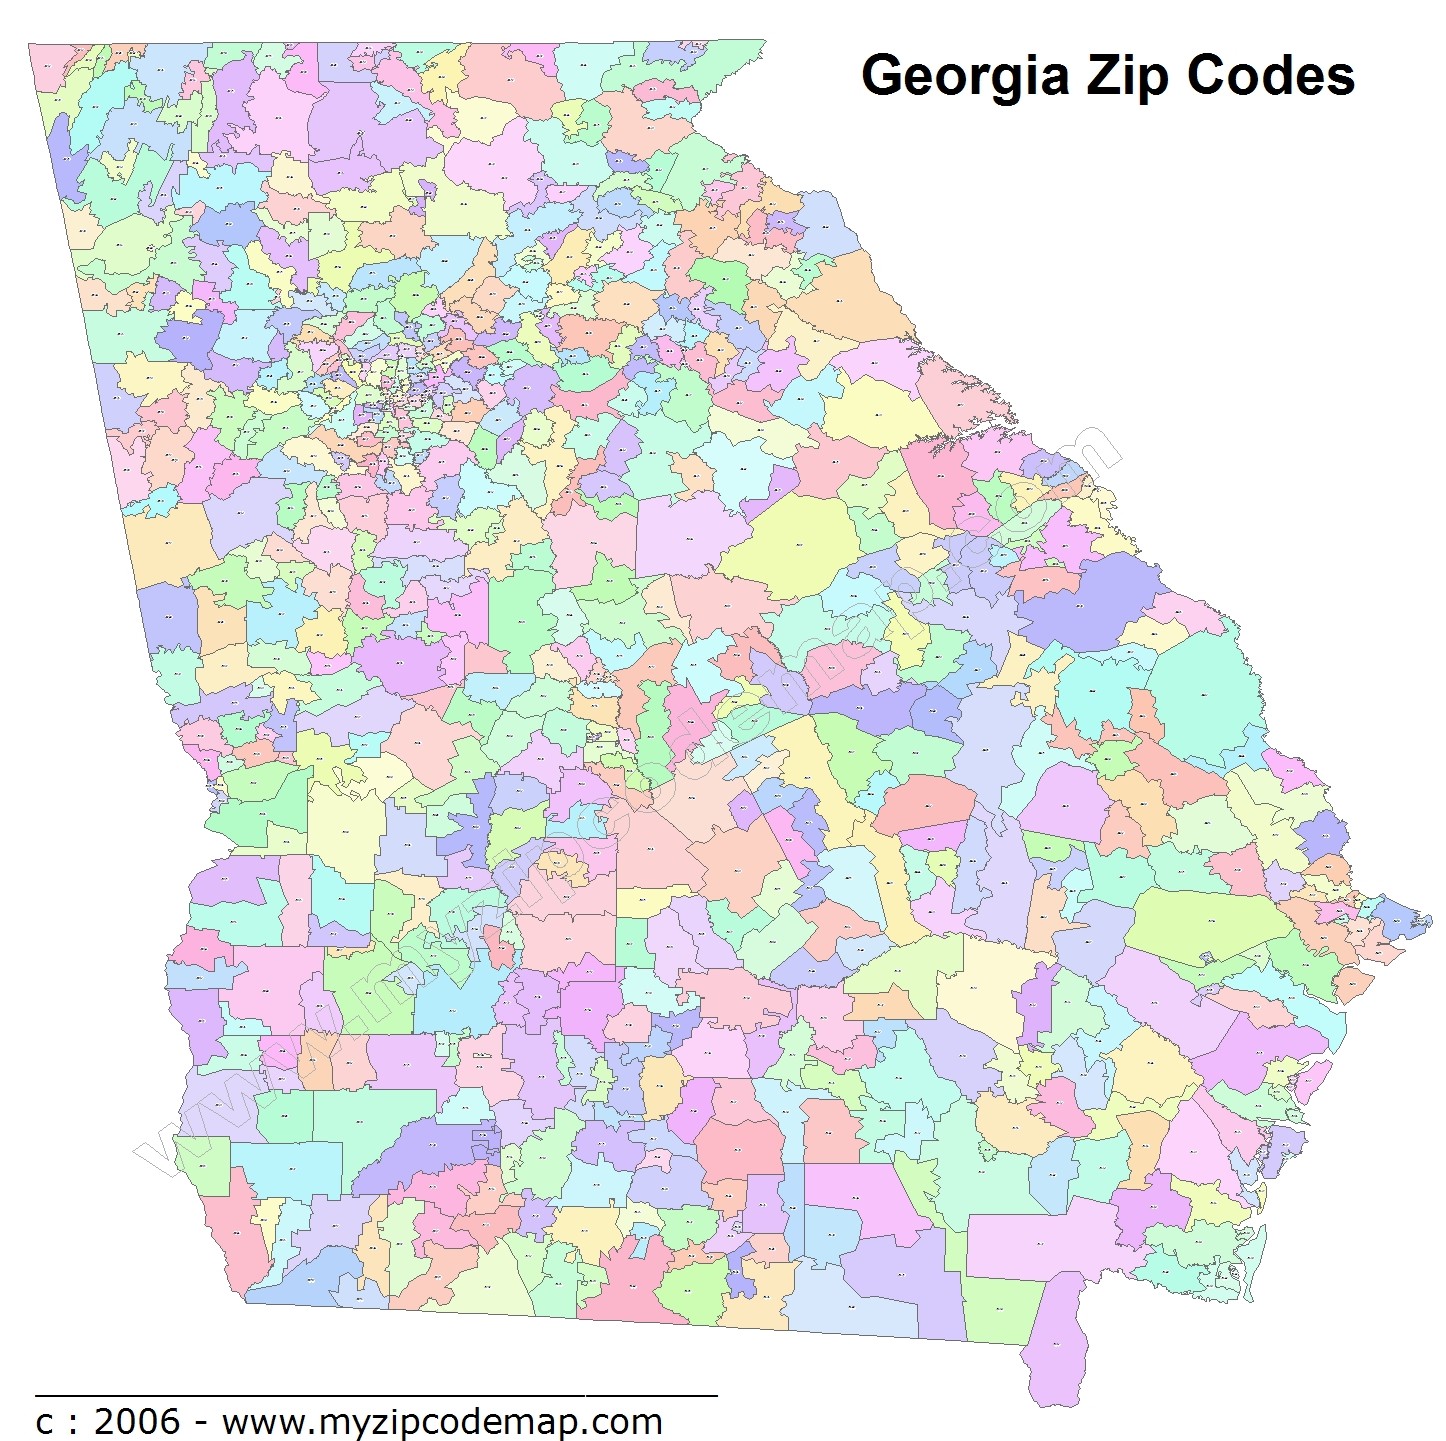 Georgia Zip Code Maps - Free Georgia Zip Code Maps